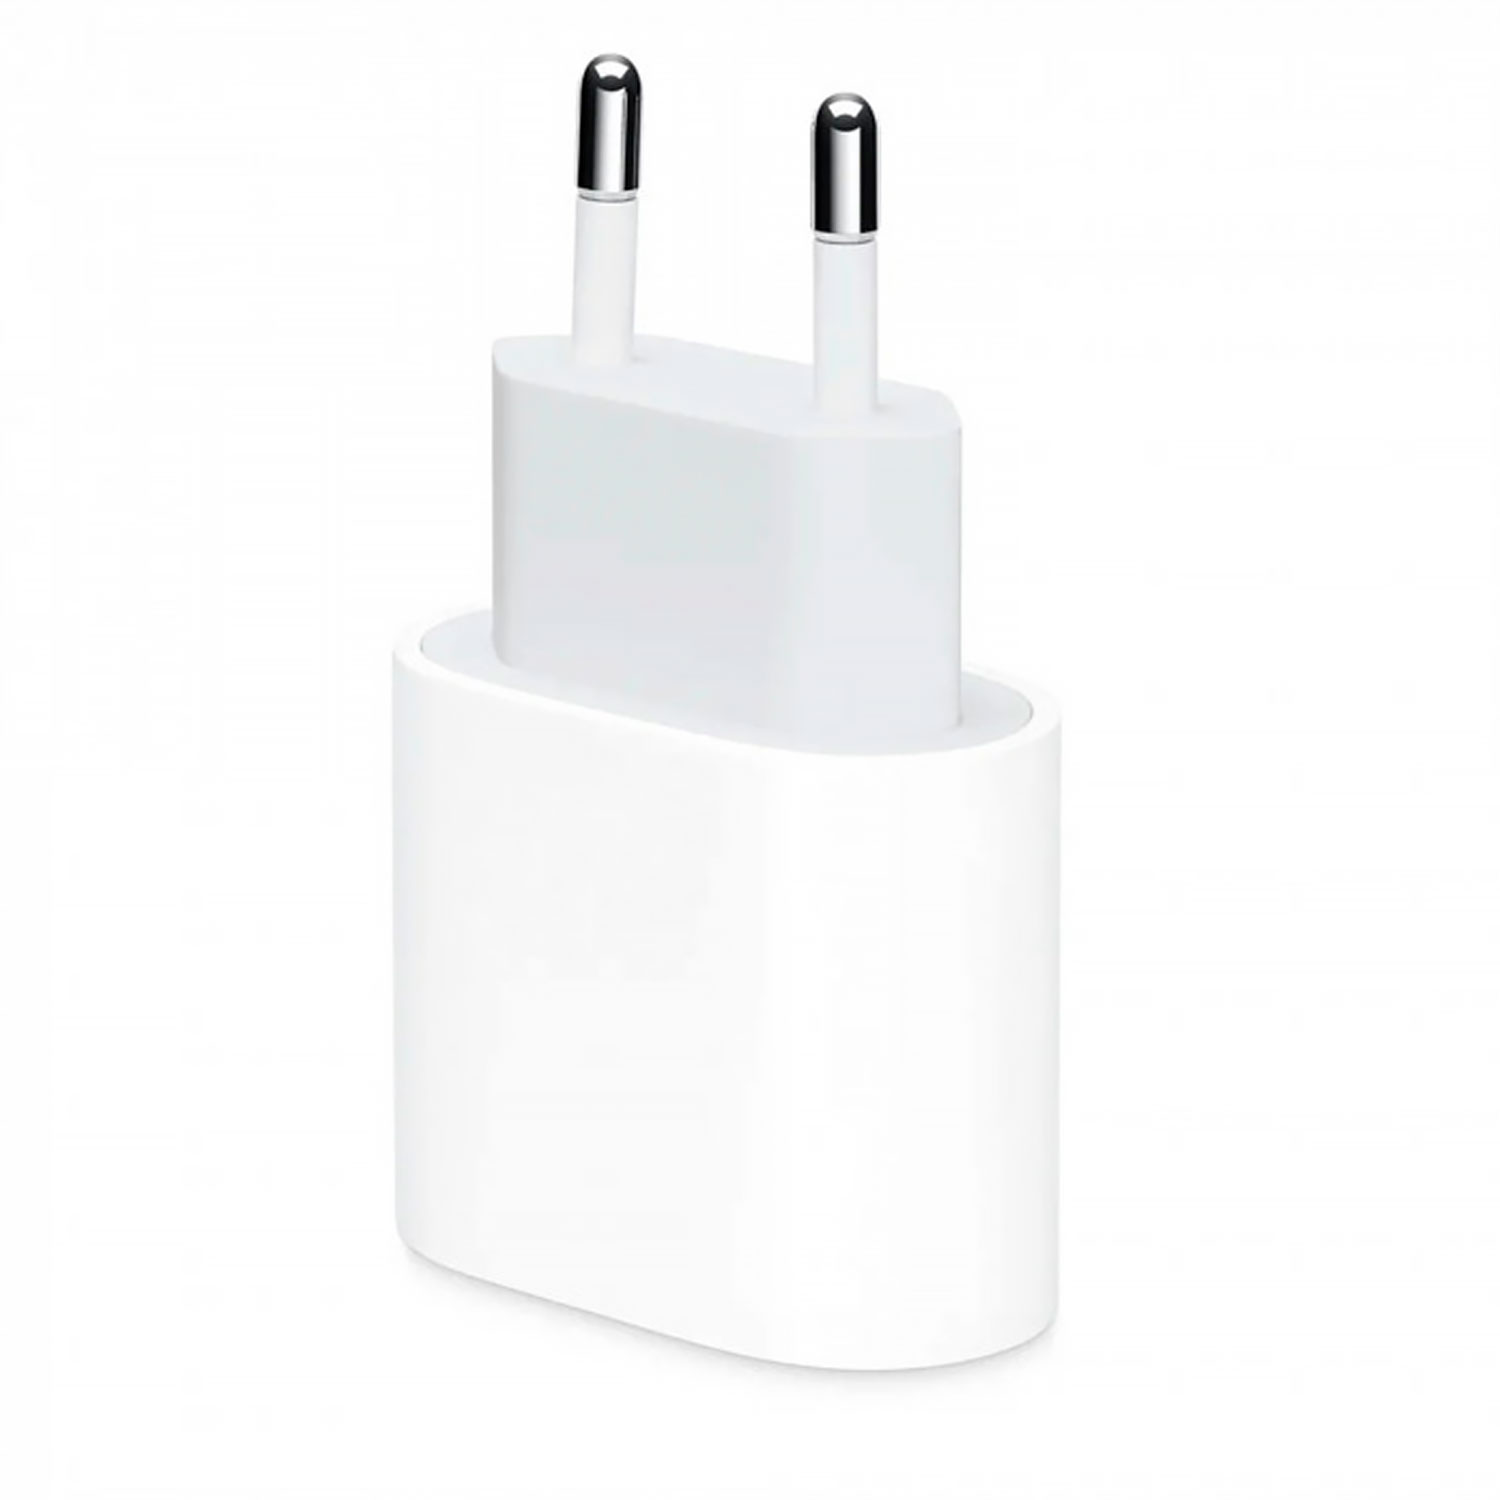 Adaptador USB-C Apple para iPhone 12 - Branco (MU7U2LL/A)